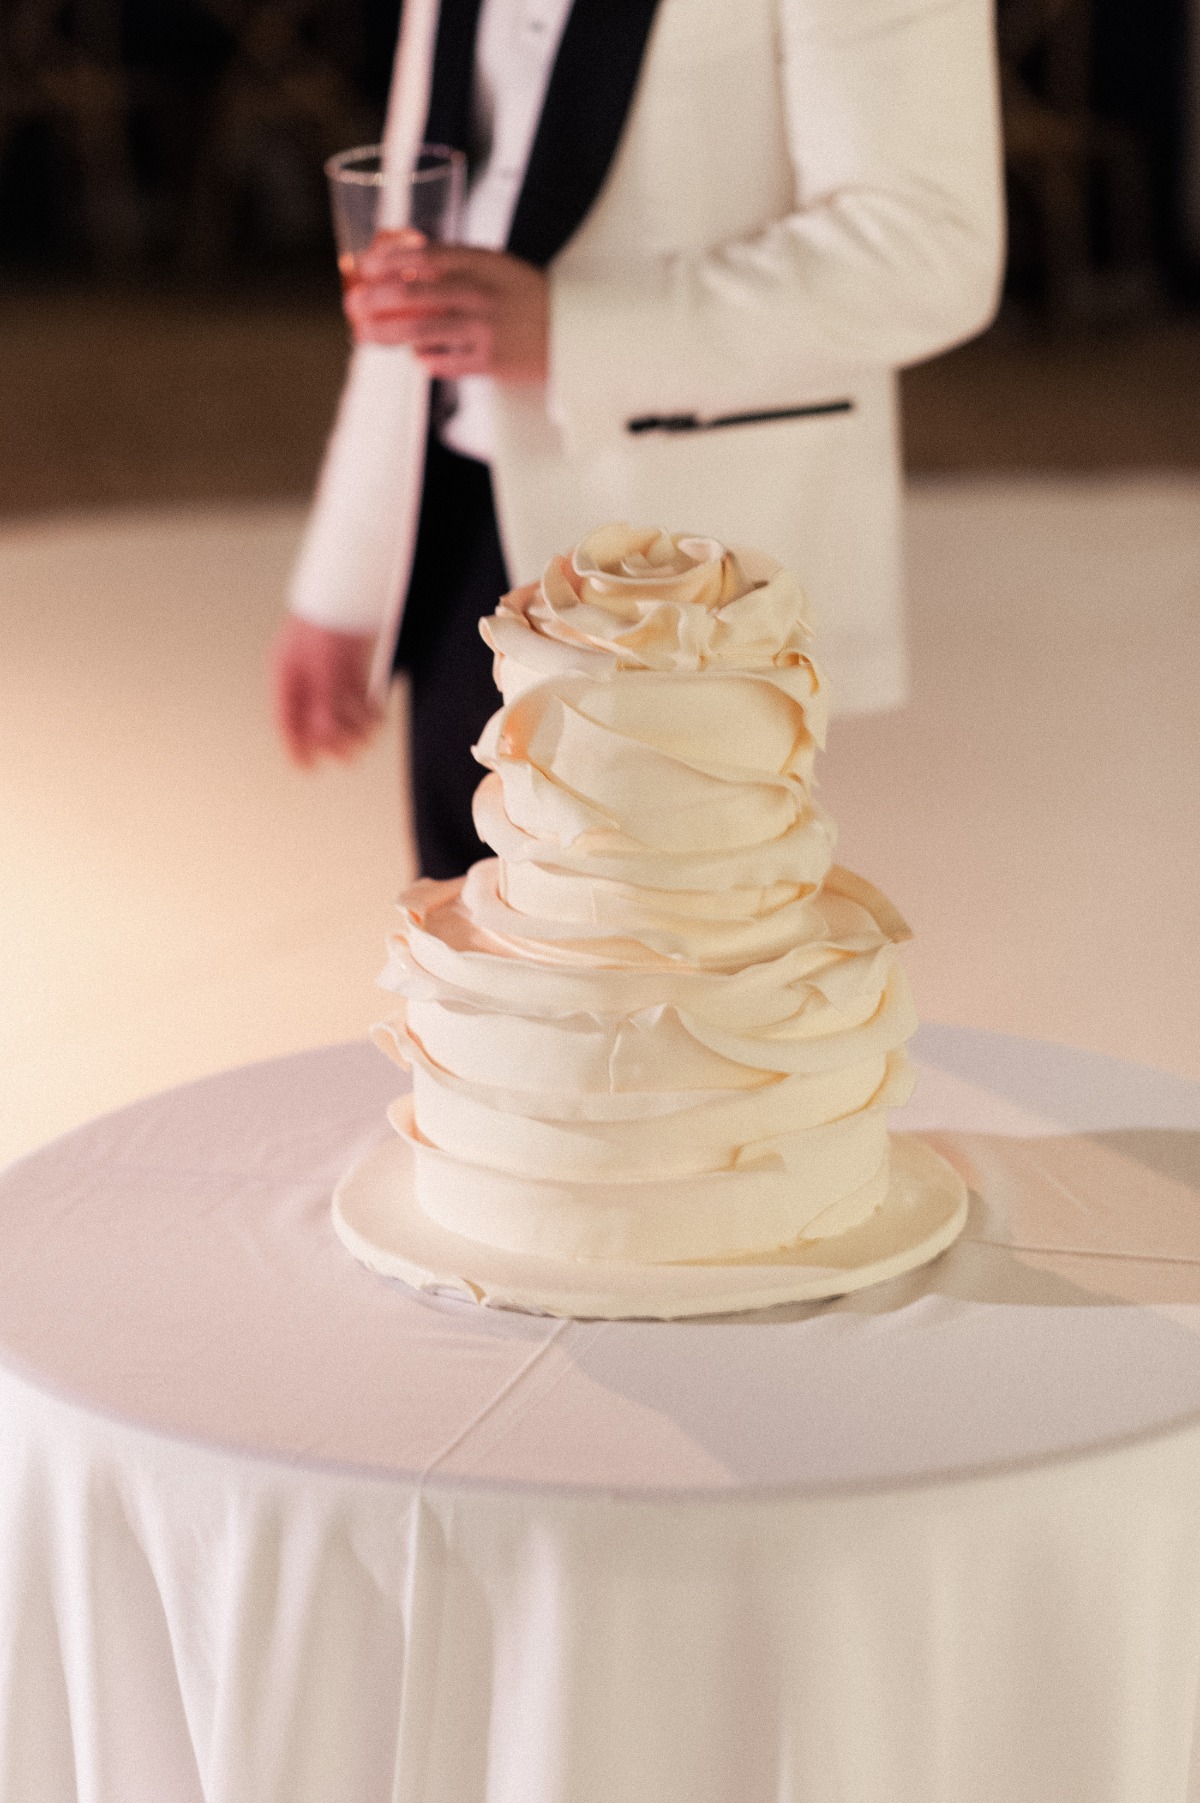 Cream-colored wedding cake